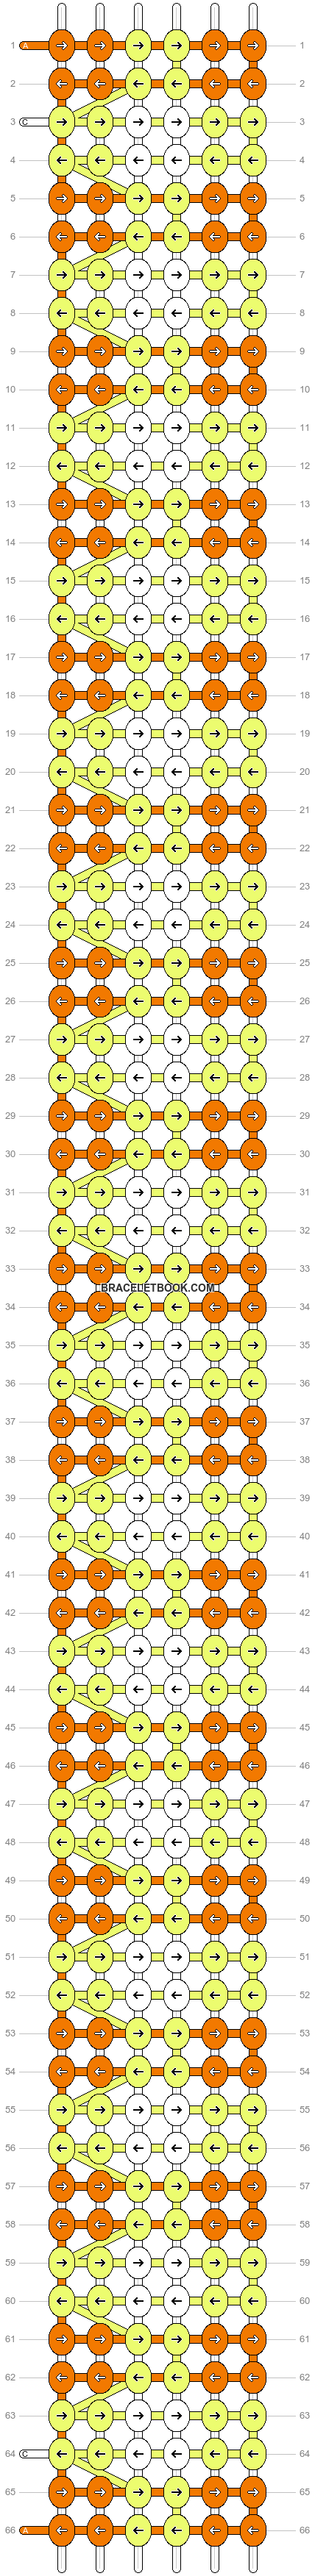 Alpha pattern #80755 variation #151413 pattern